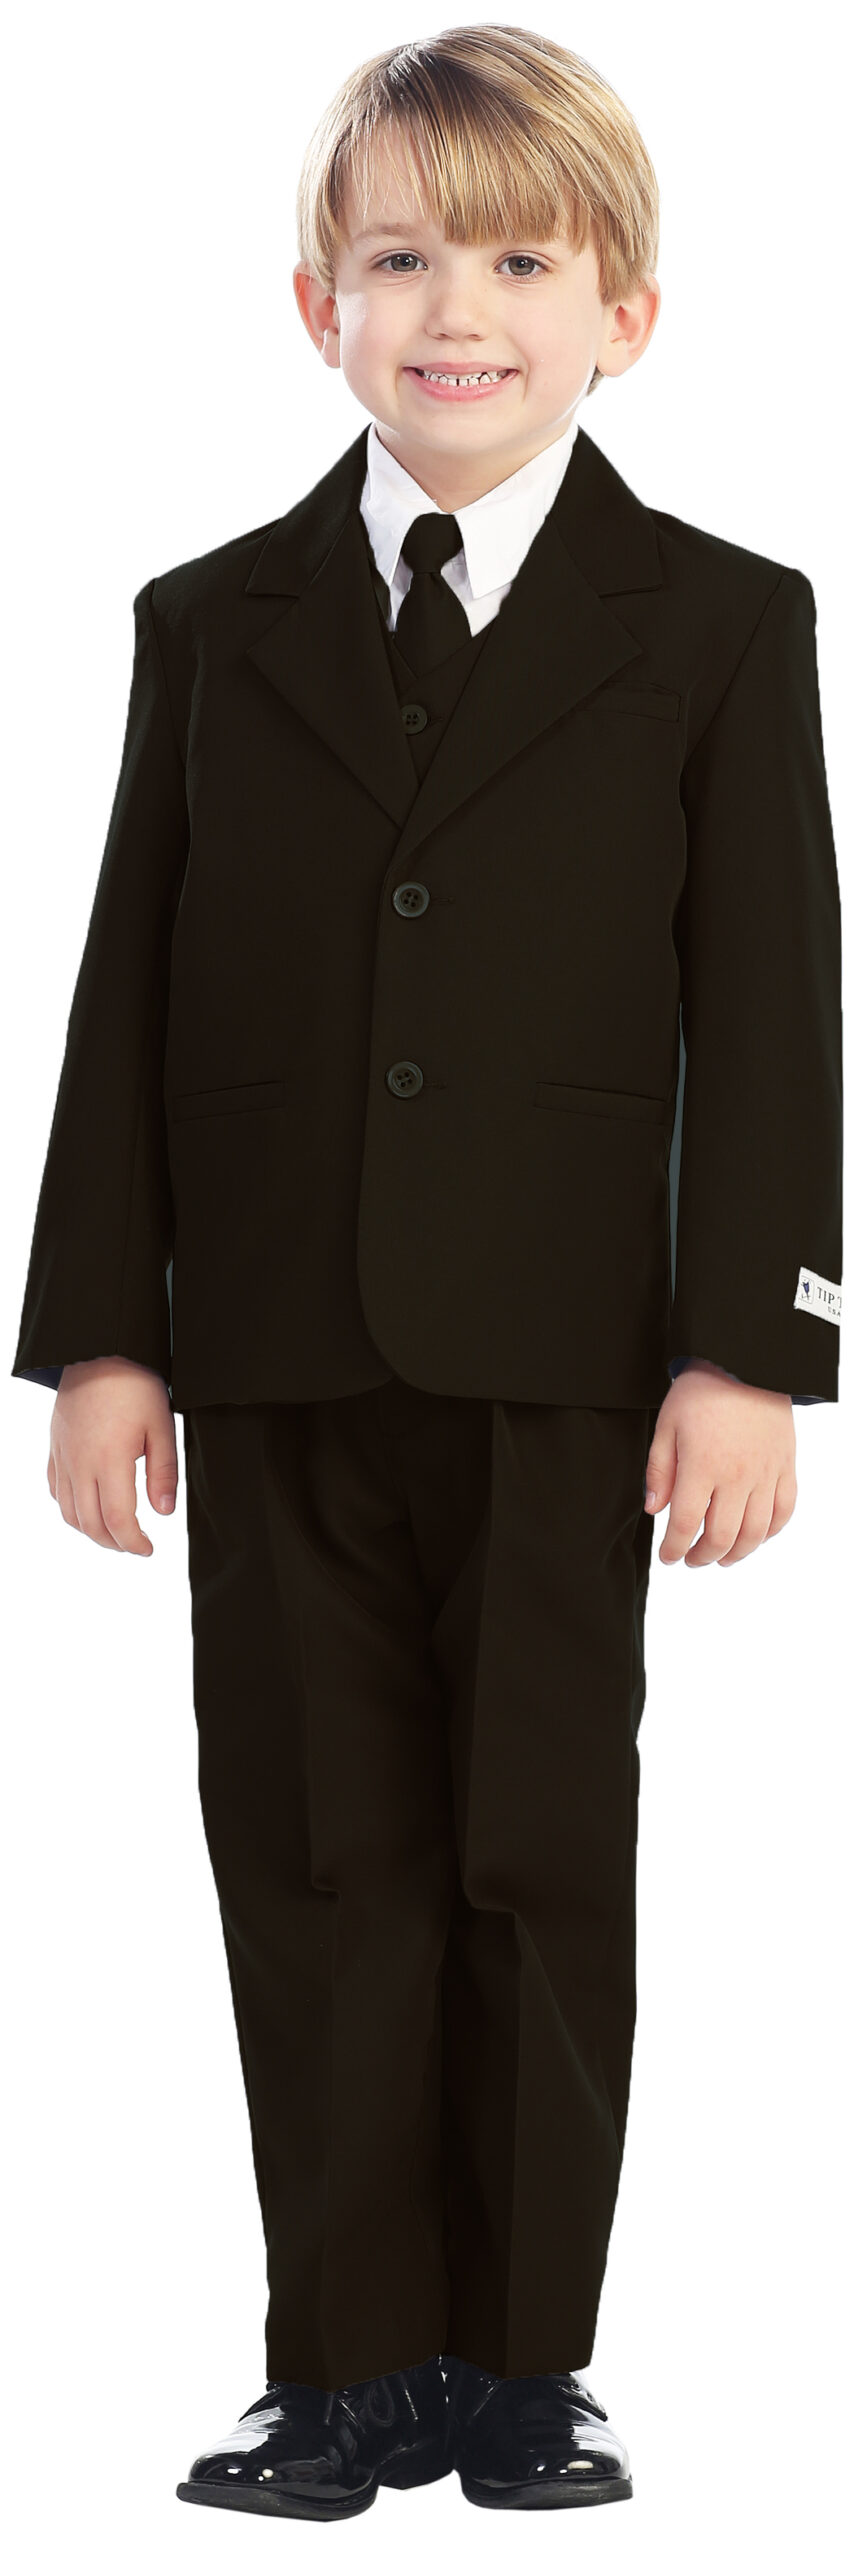 Avery Hill 5-Piece Boy's 2-Button Dress Suit Full-Back Vest - Brown Size 7